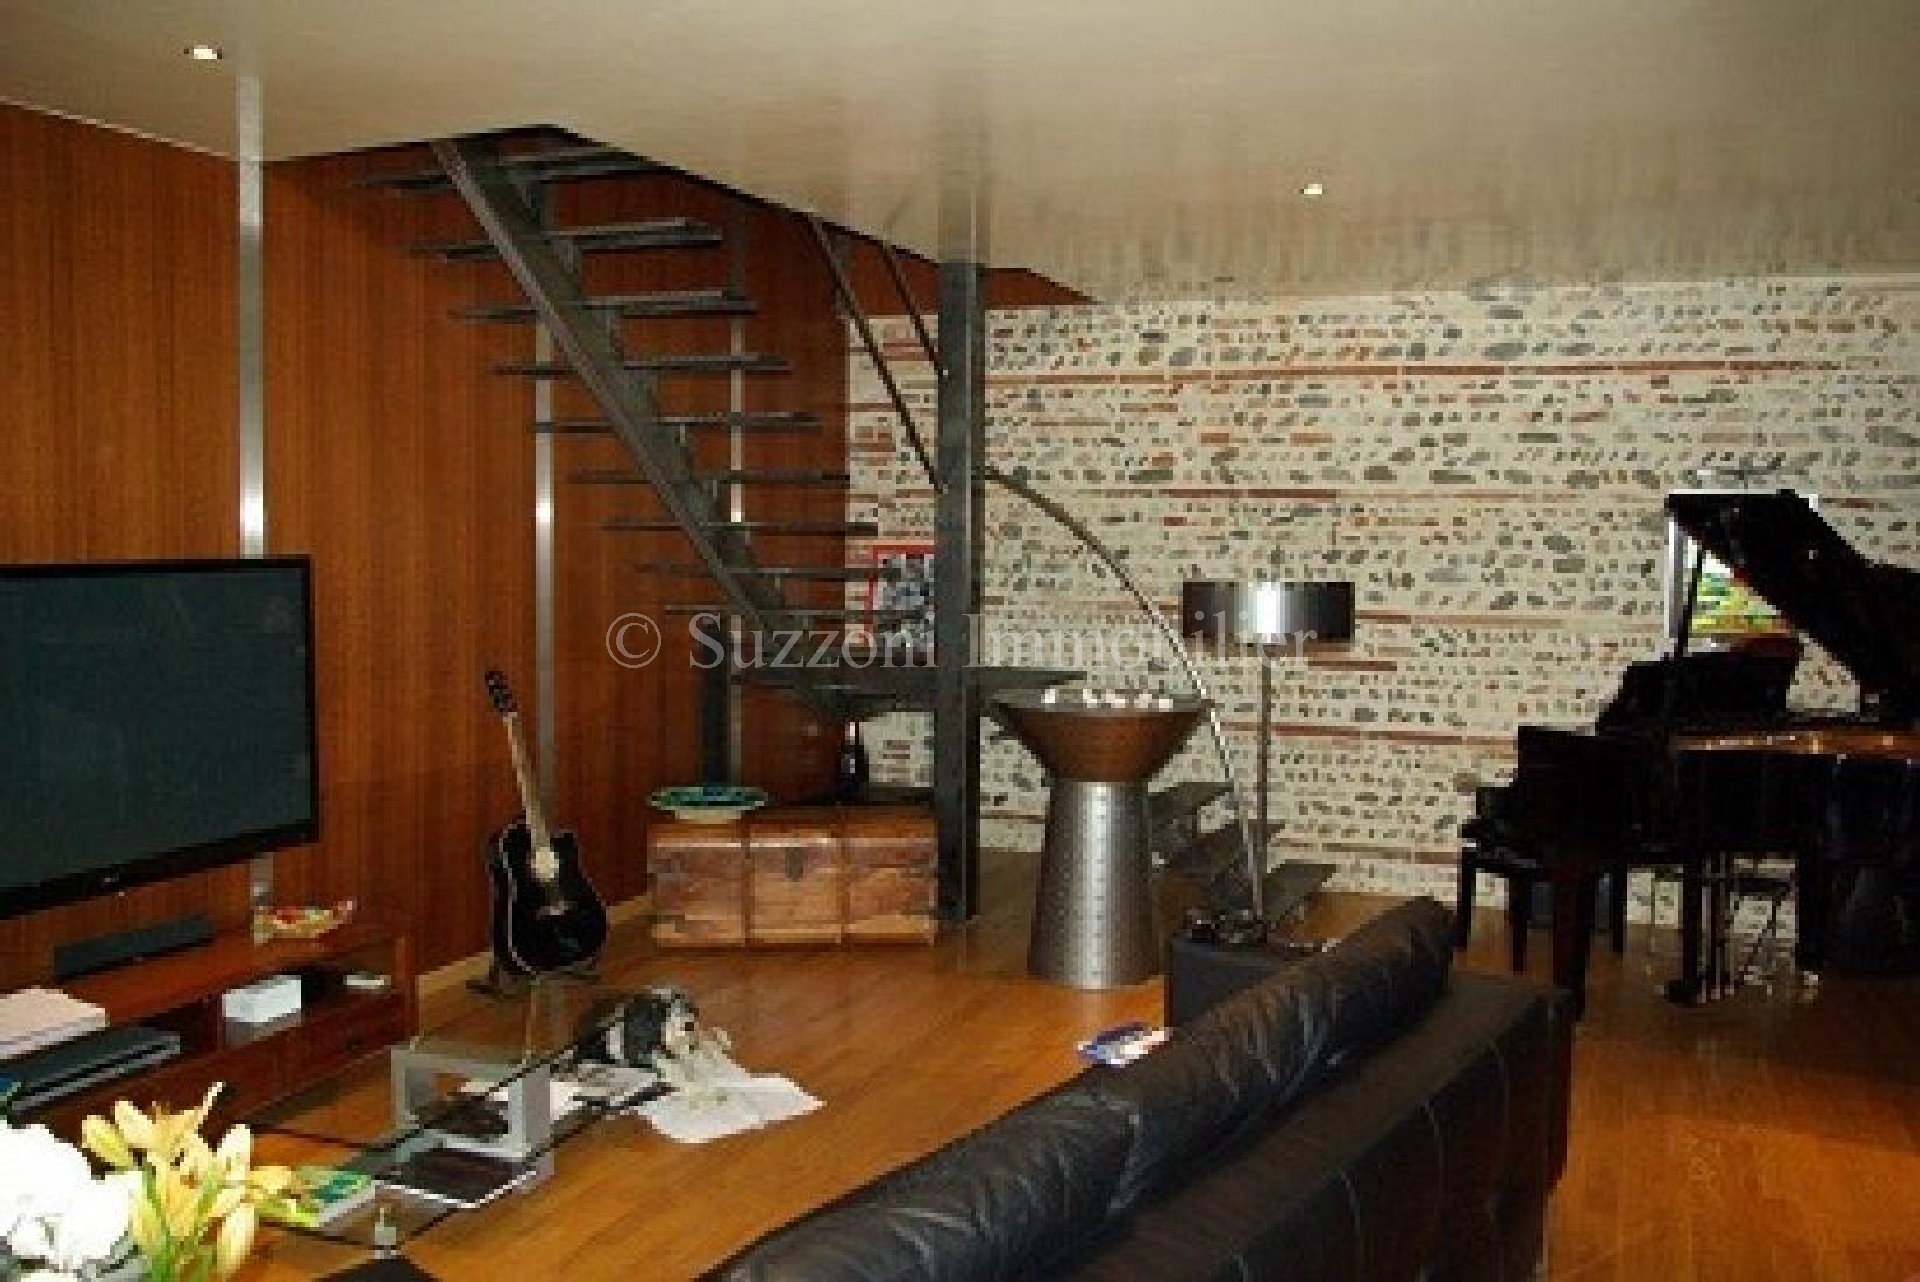 Vente appartement - LA SEYNE FABREGAS 56,23 m², 2 pièces